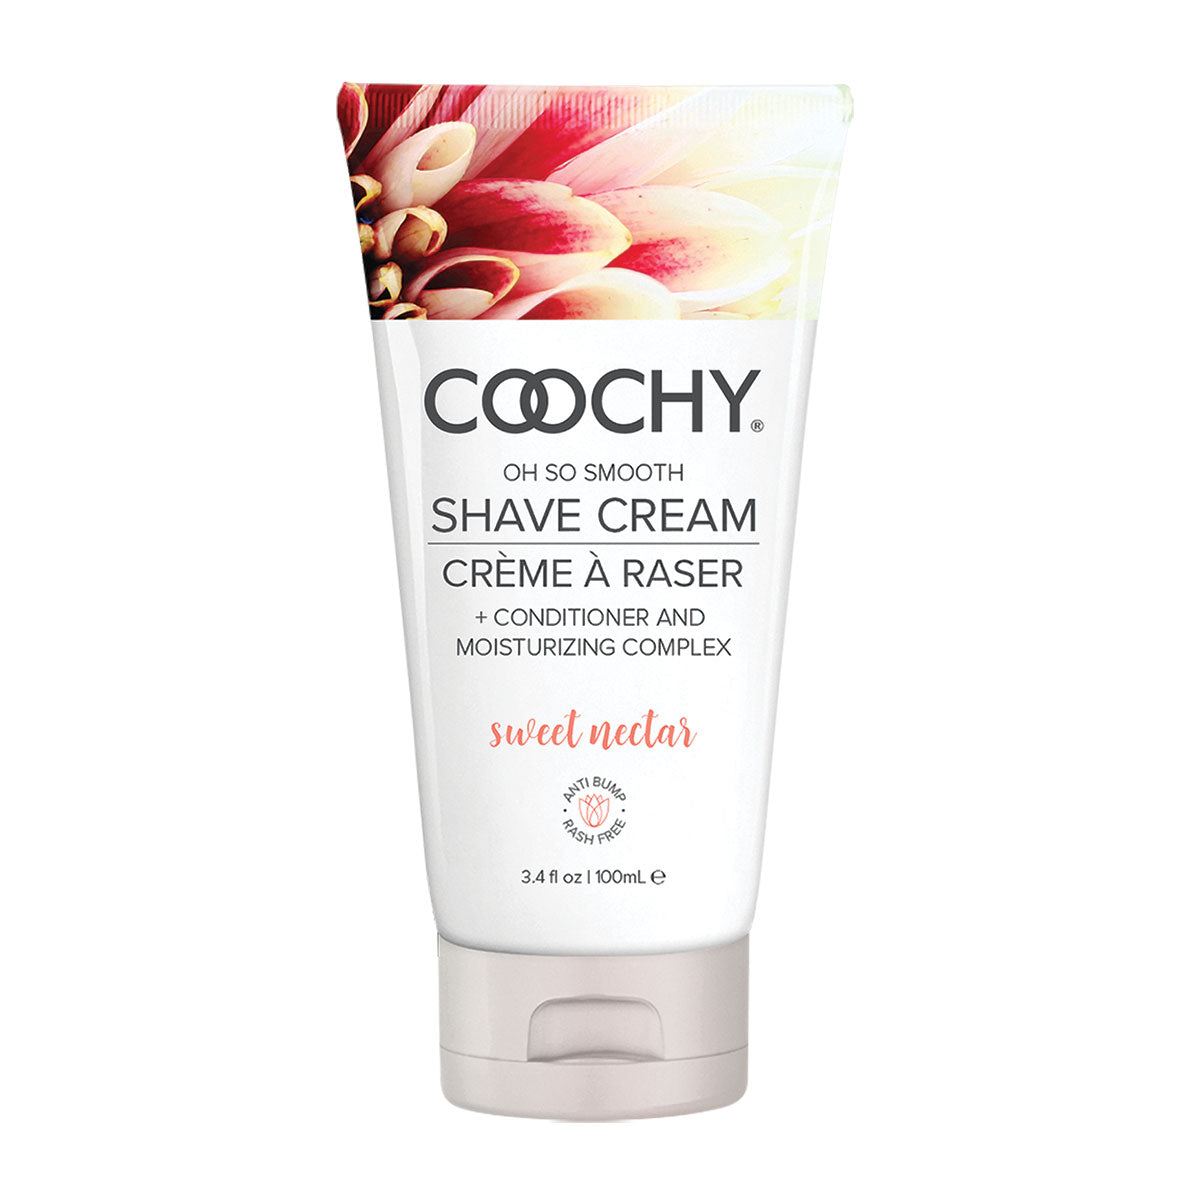 Coochy Shave Cream 3.4oz - Sweet Nectar